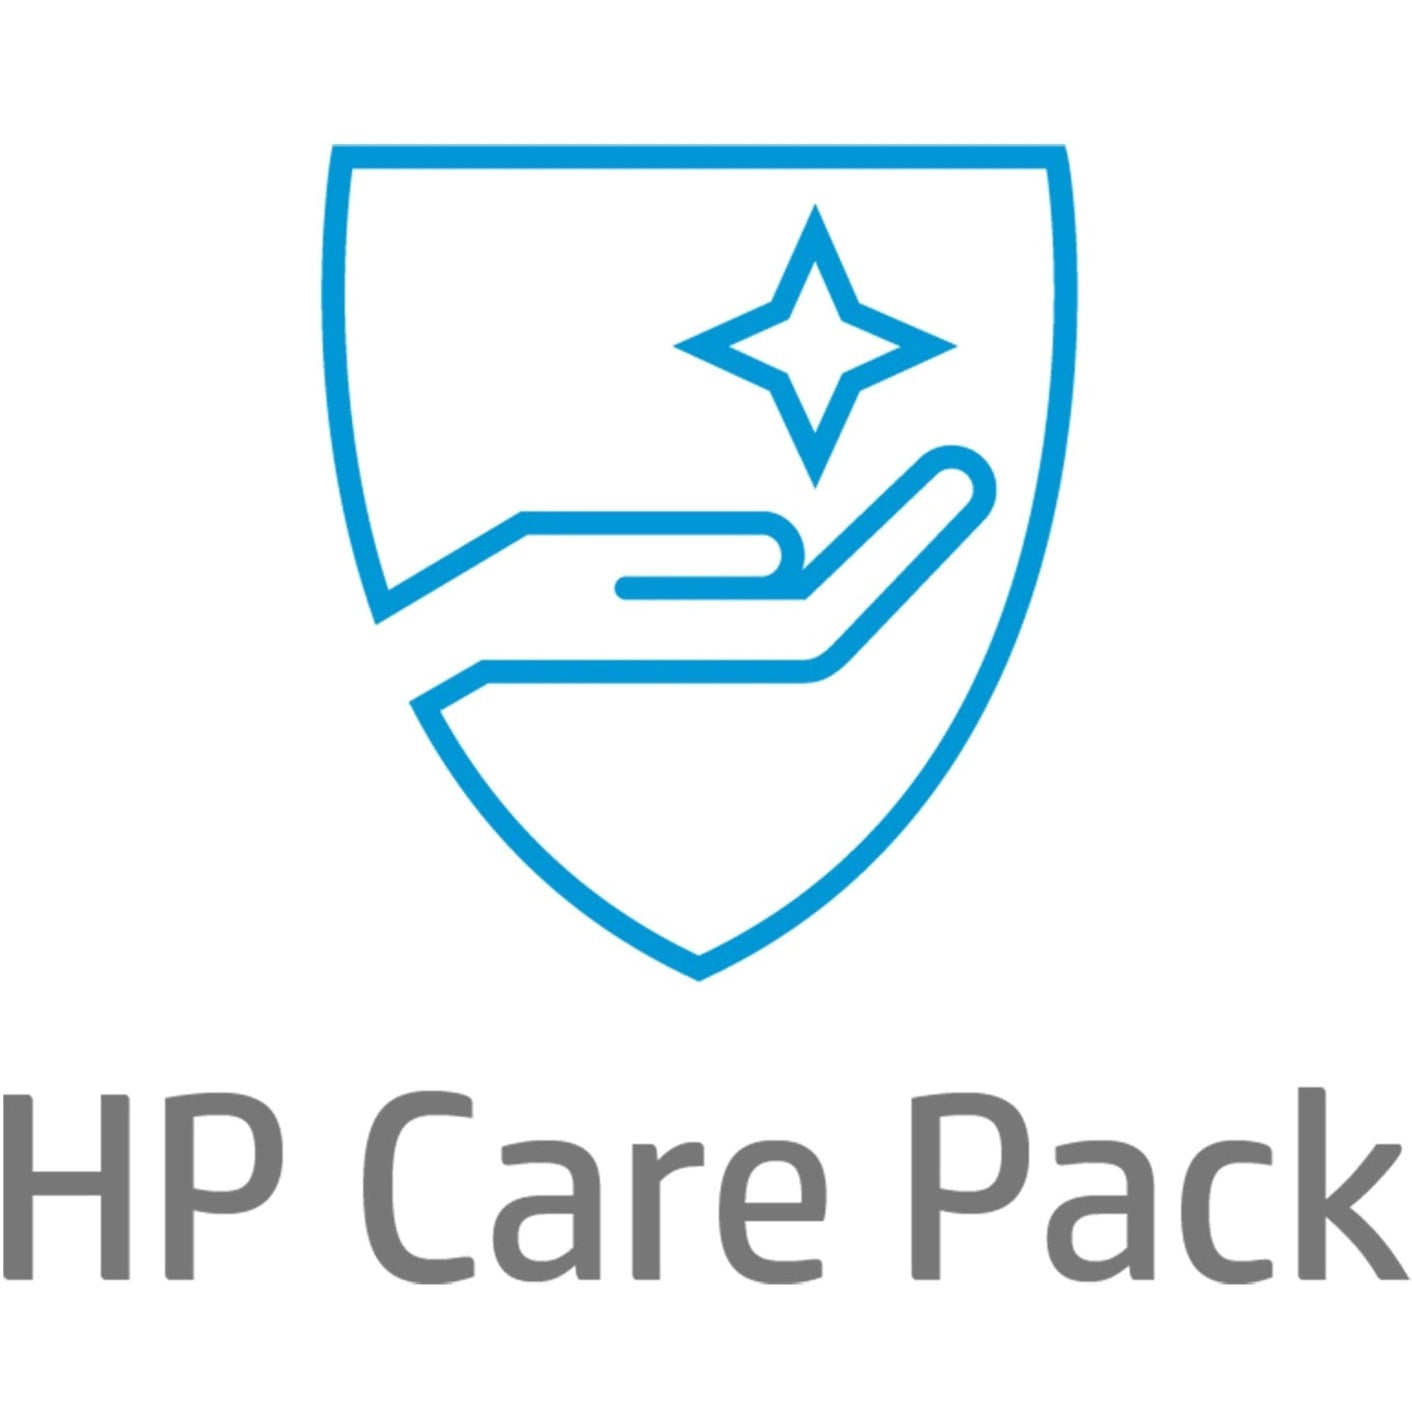 HP Care Pack - 1 Year - Service (UK701E)